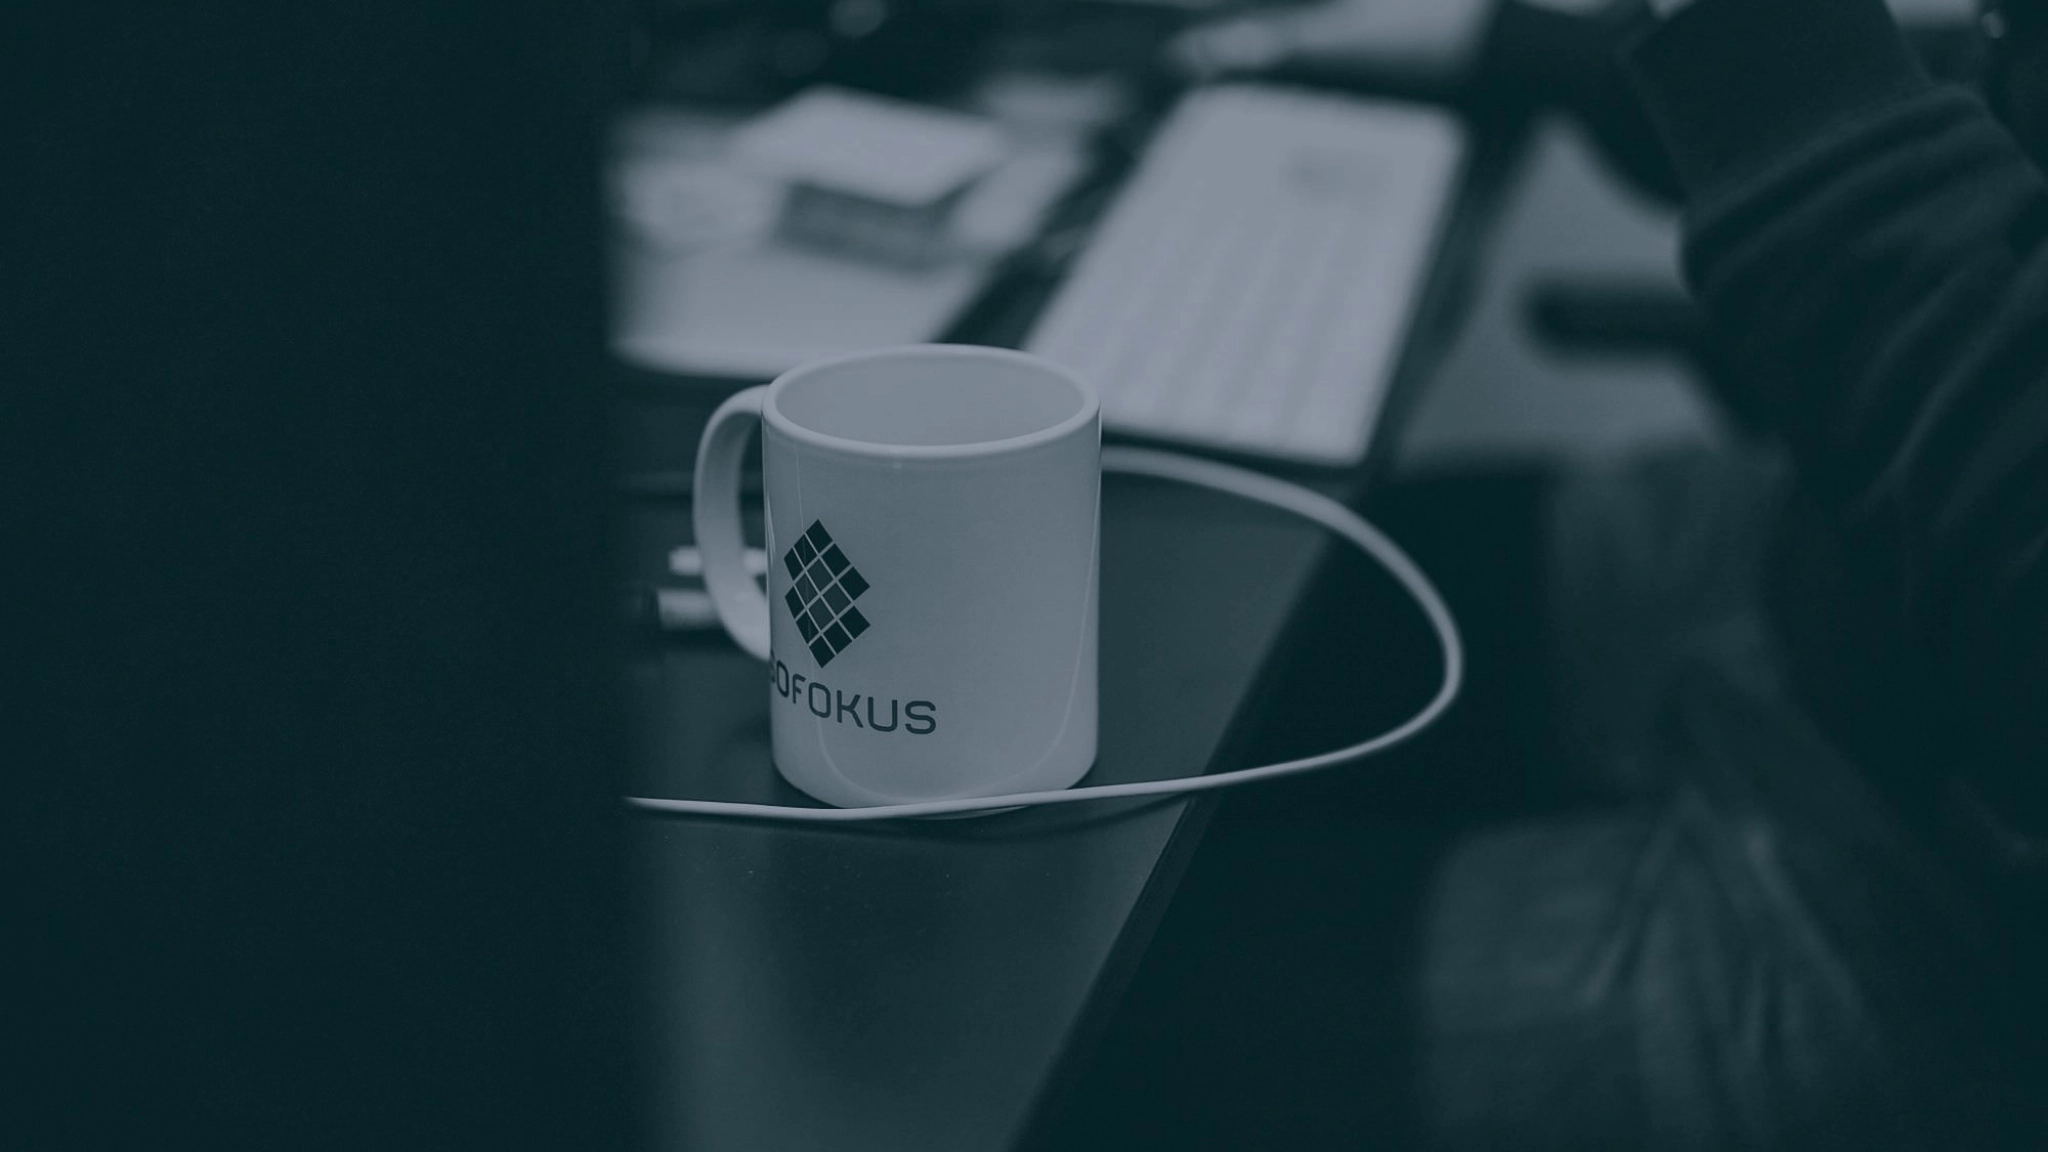 Sofokus - Your partner in digital business development